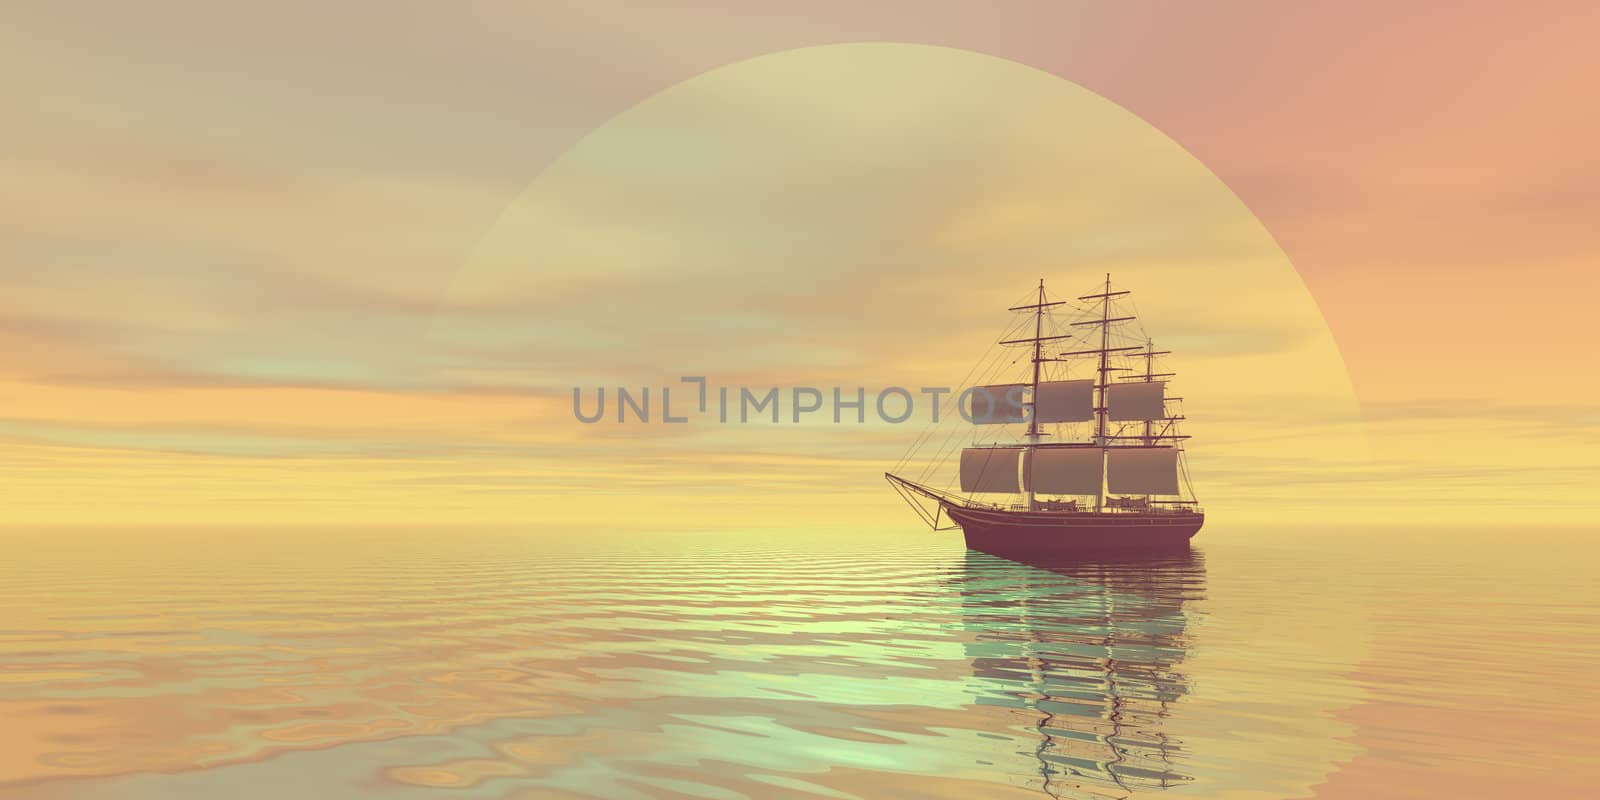 A clipper ship sails on golden seas.